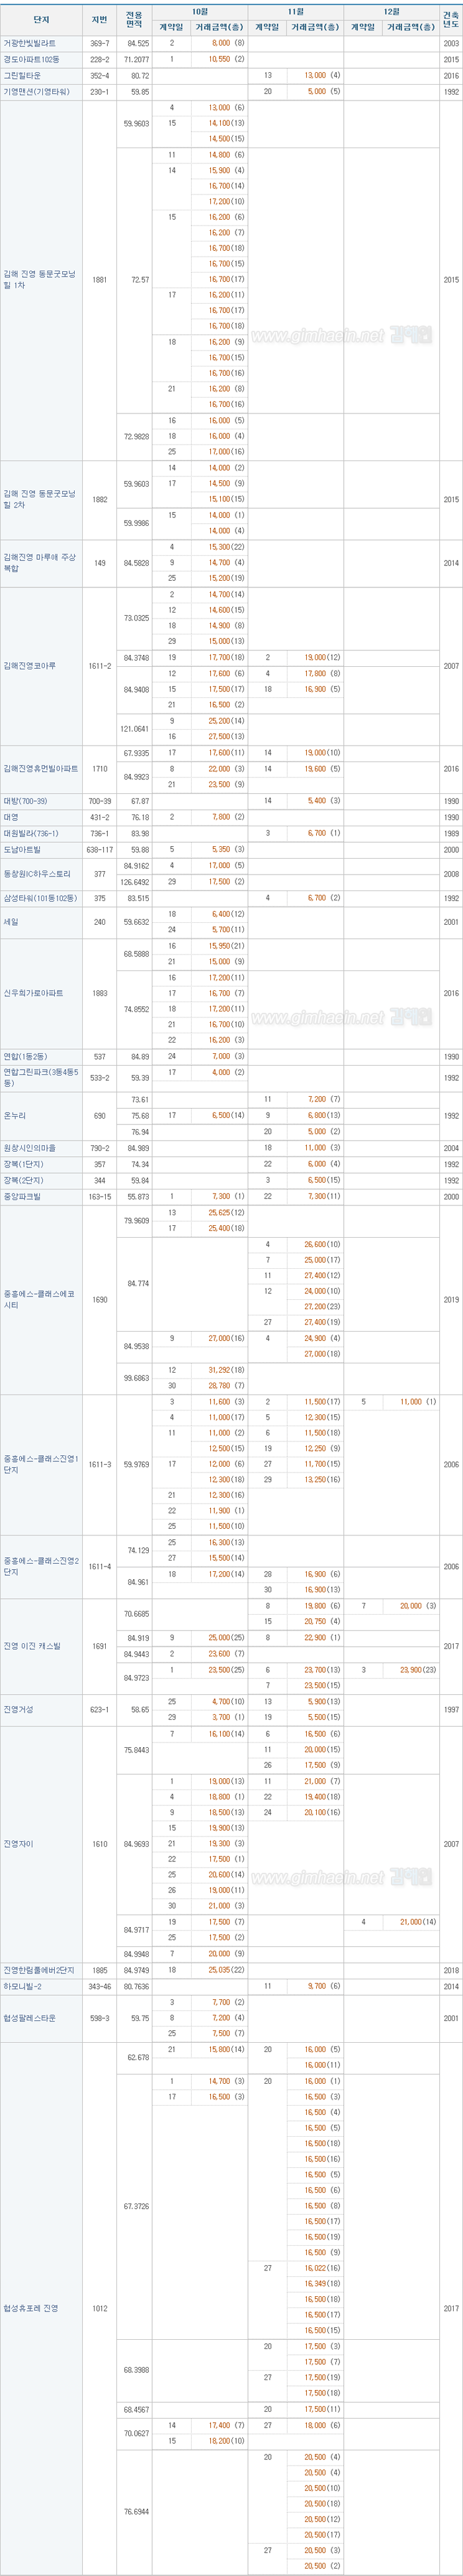 price_gh_jinyeong_1911.gif